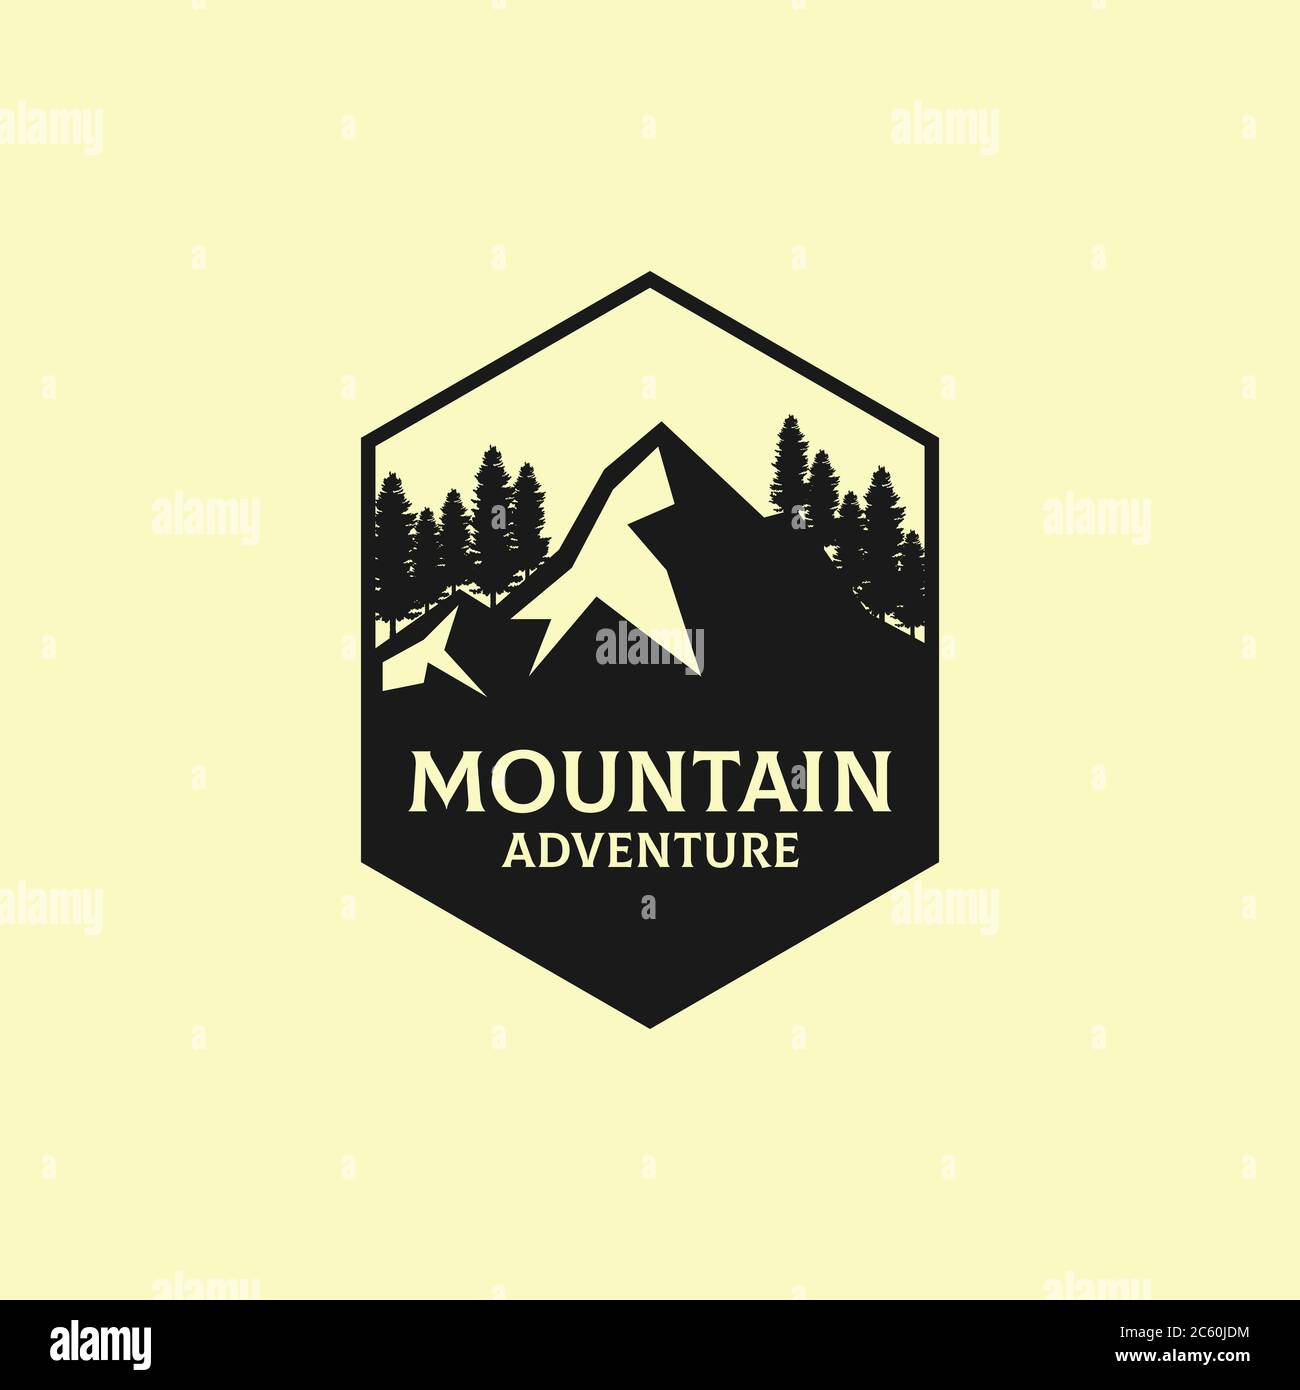 Mountain Adventure Outdoor logo design, best for sport or recreation logo inspiration Stock Vector